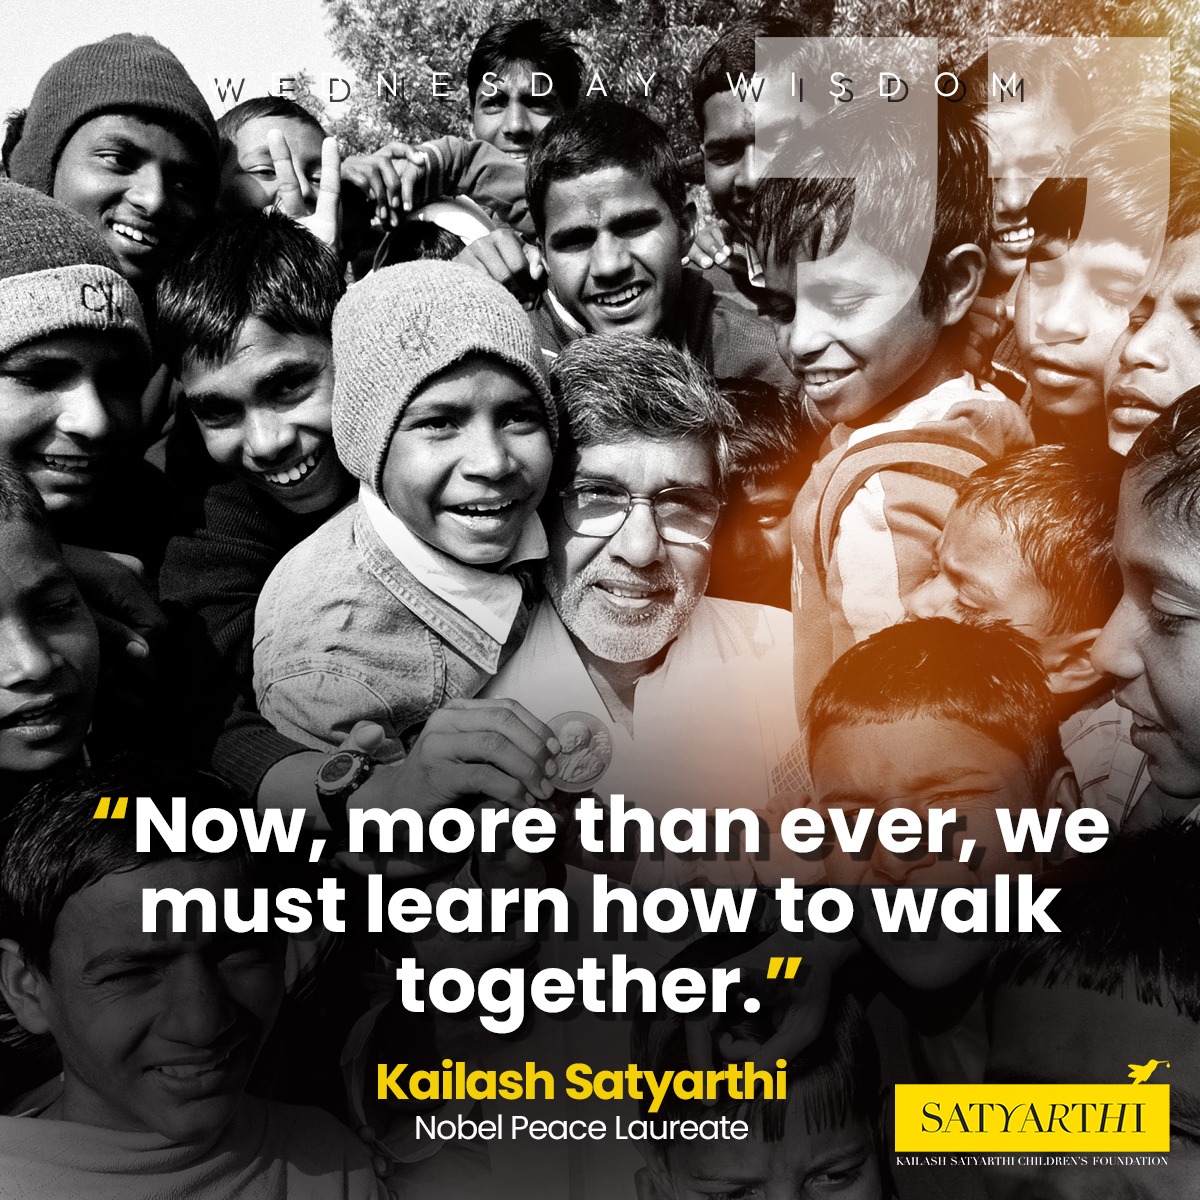 💯✅ #KailashSatyarthi #Kscf #WednesdayWisdom #everychildmatters